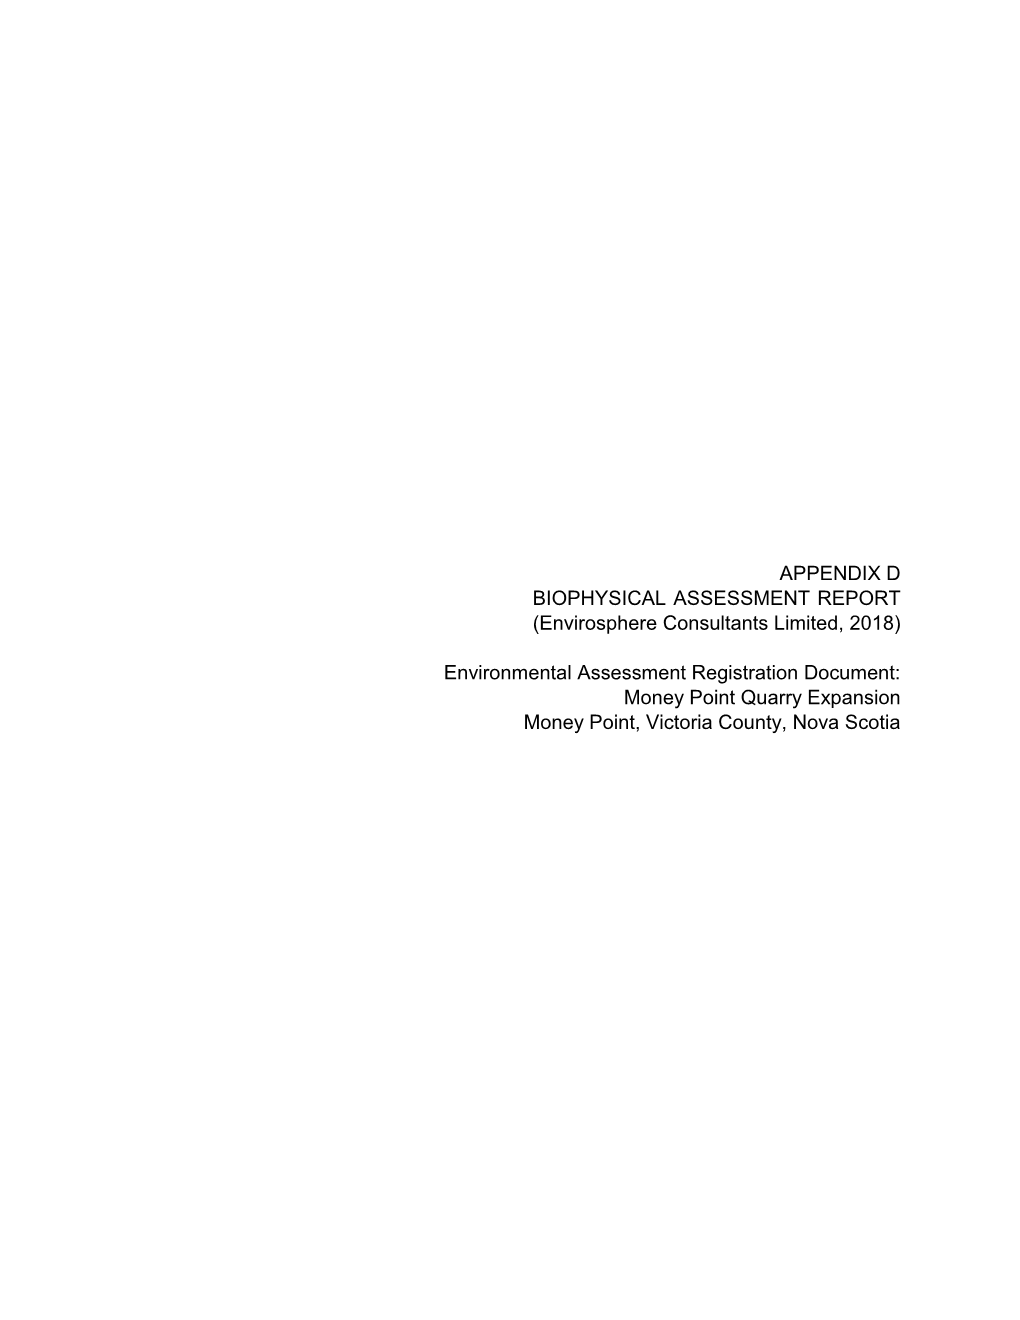 APPENDIX D BIOPHYSICAL ASSESSMENT REPORT (Envirosphere Consultants Limited, 2018)